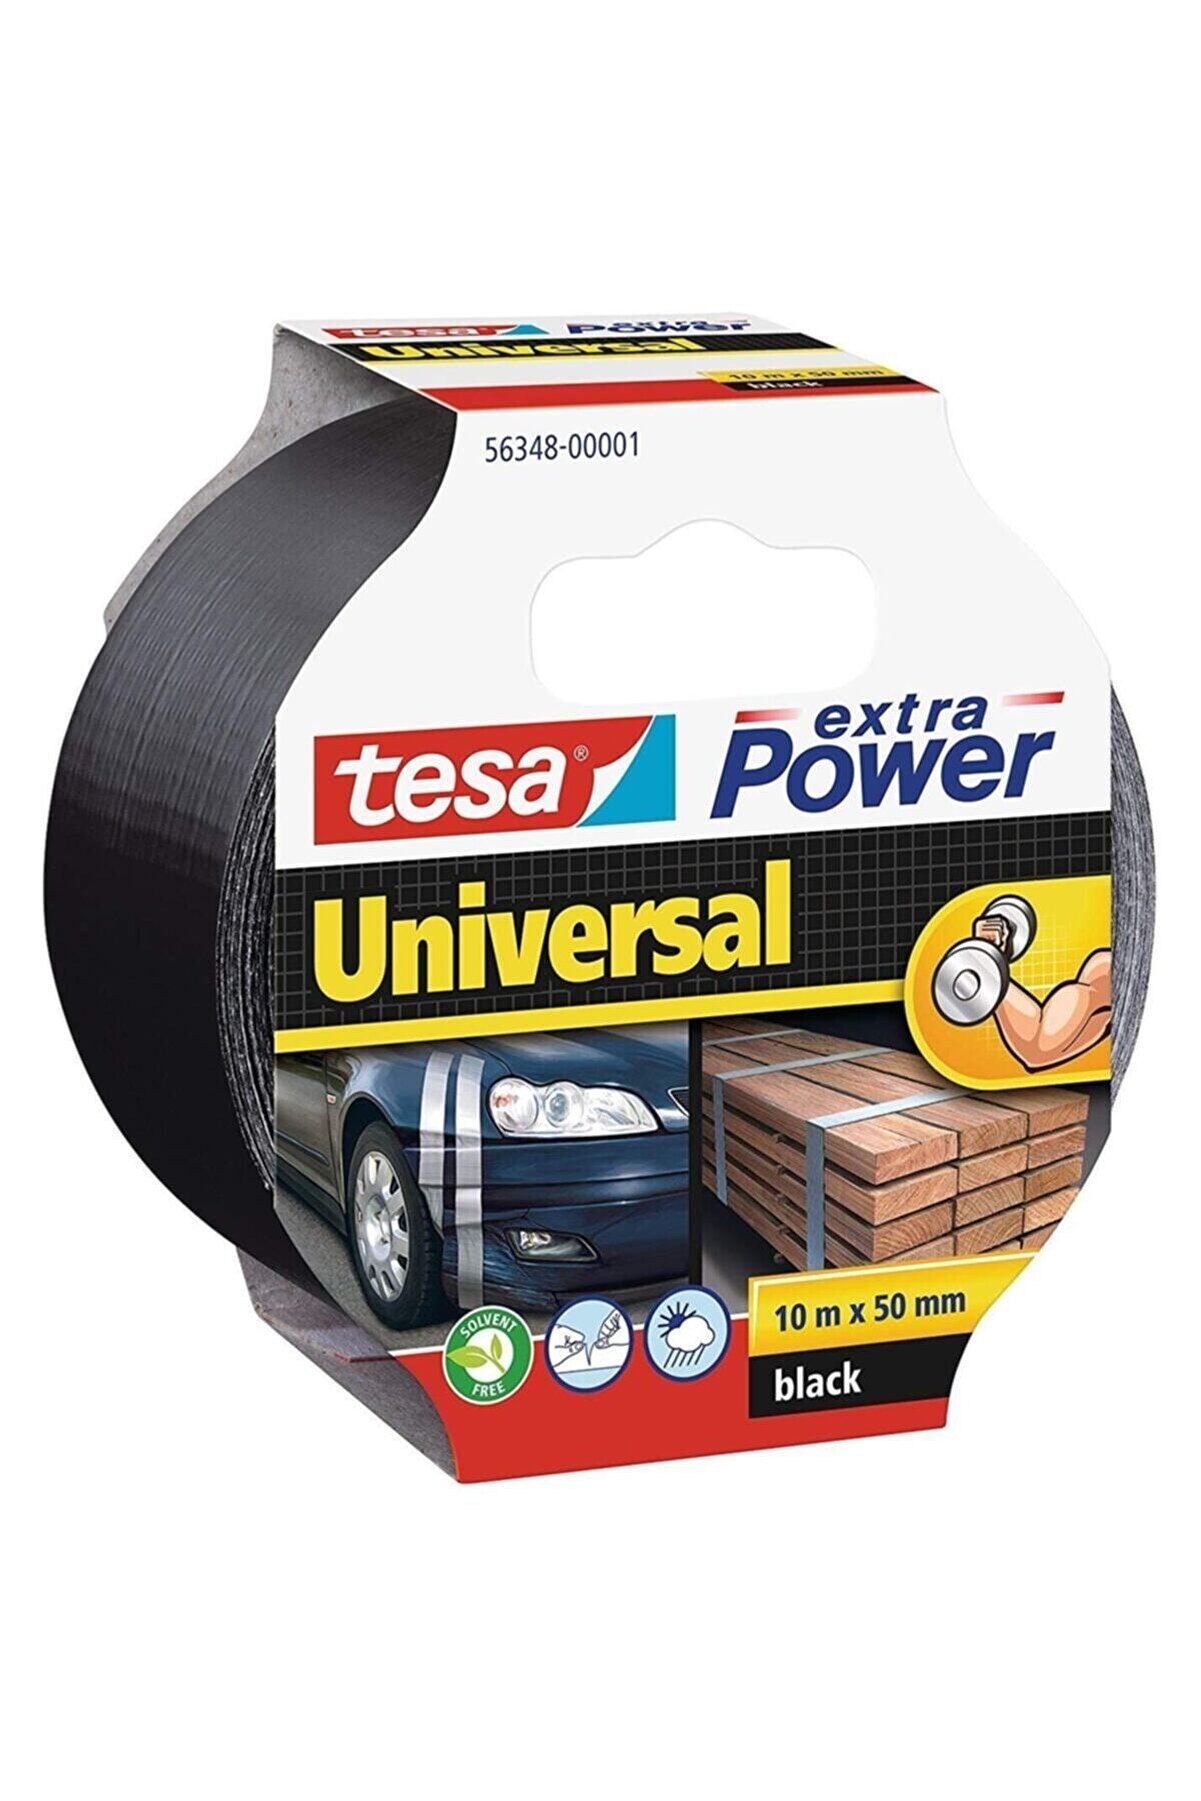 Tesa extra Power Universal Duct Bant, 10mx50mm, Siyah